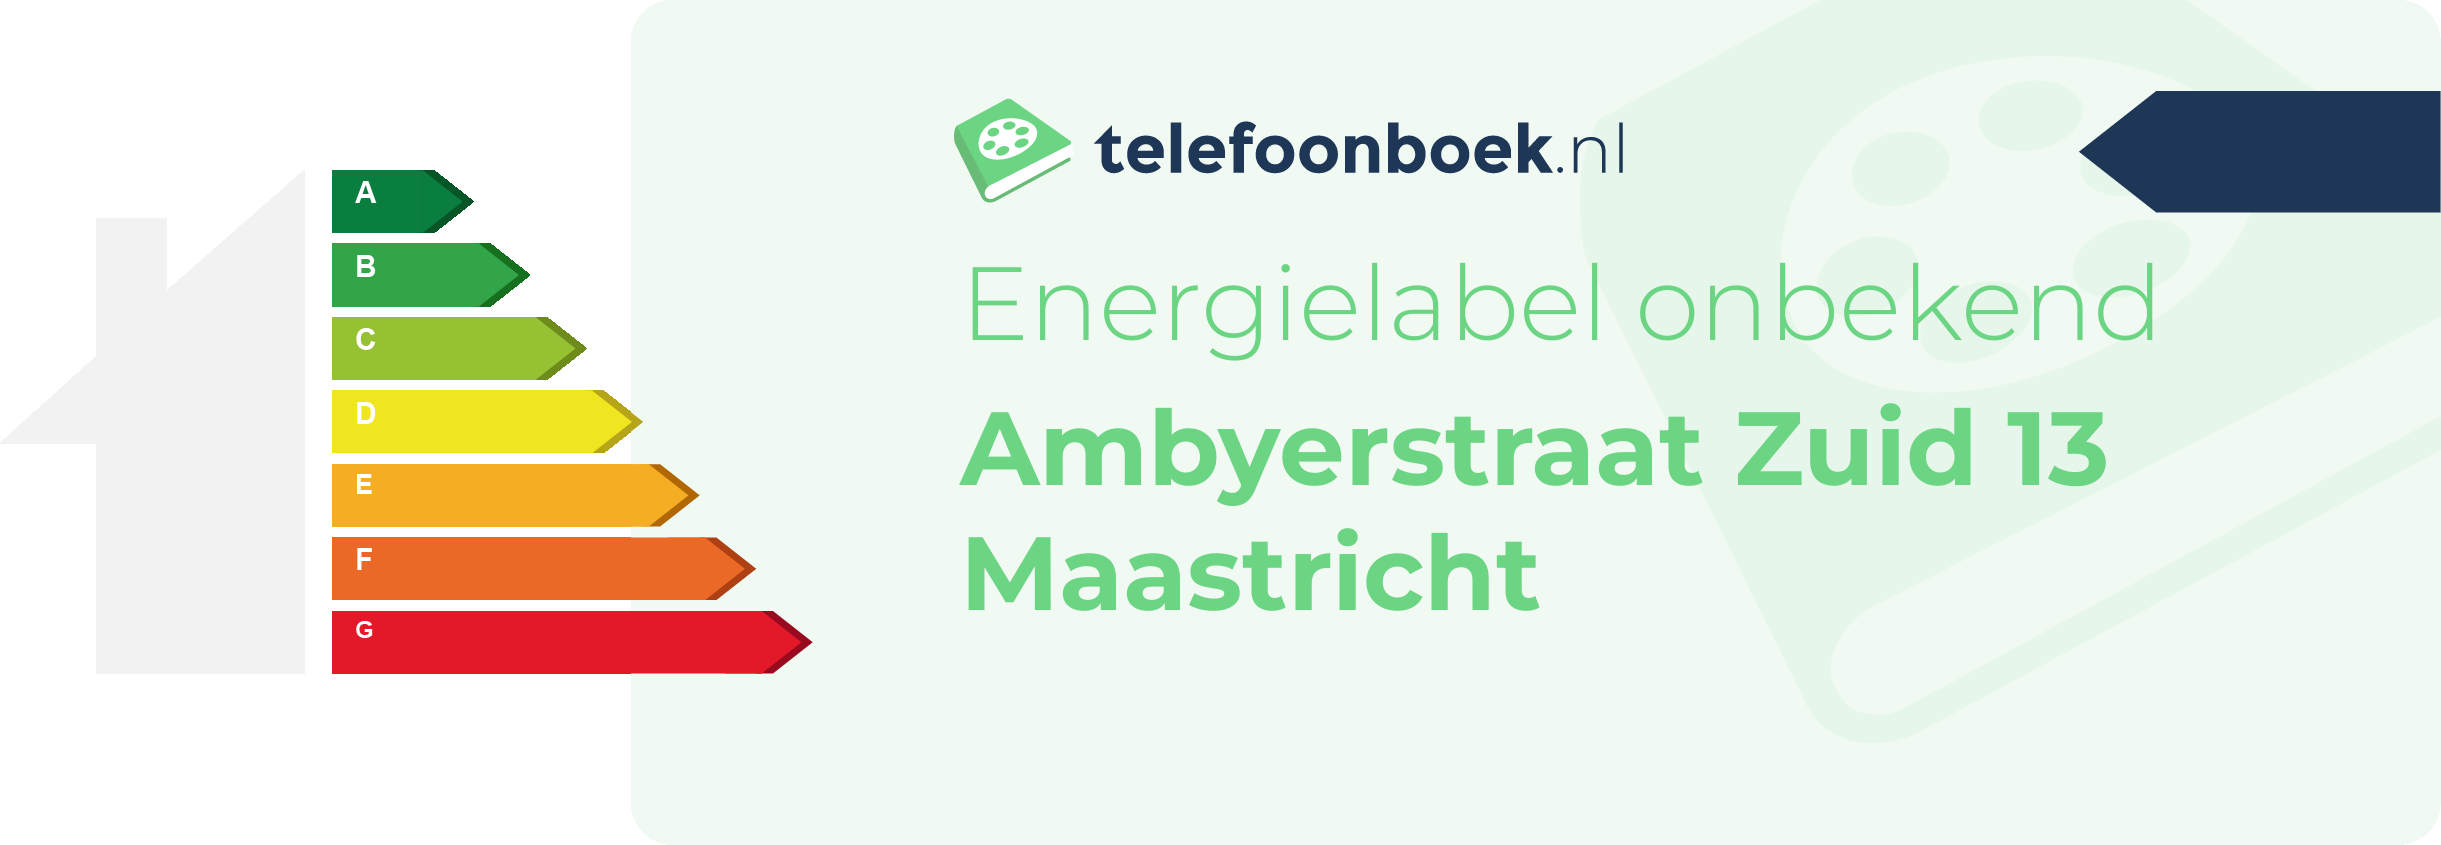 Energielabel Ambyerstraat Zuid 13 Maastricht